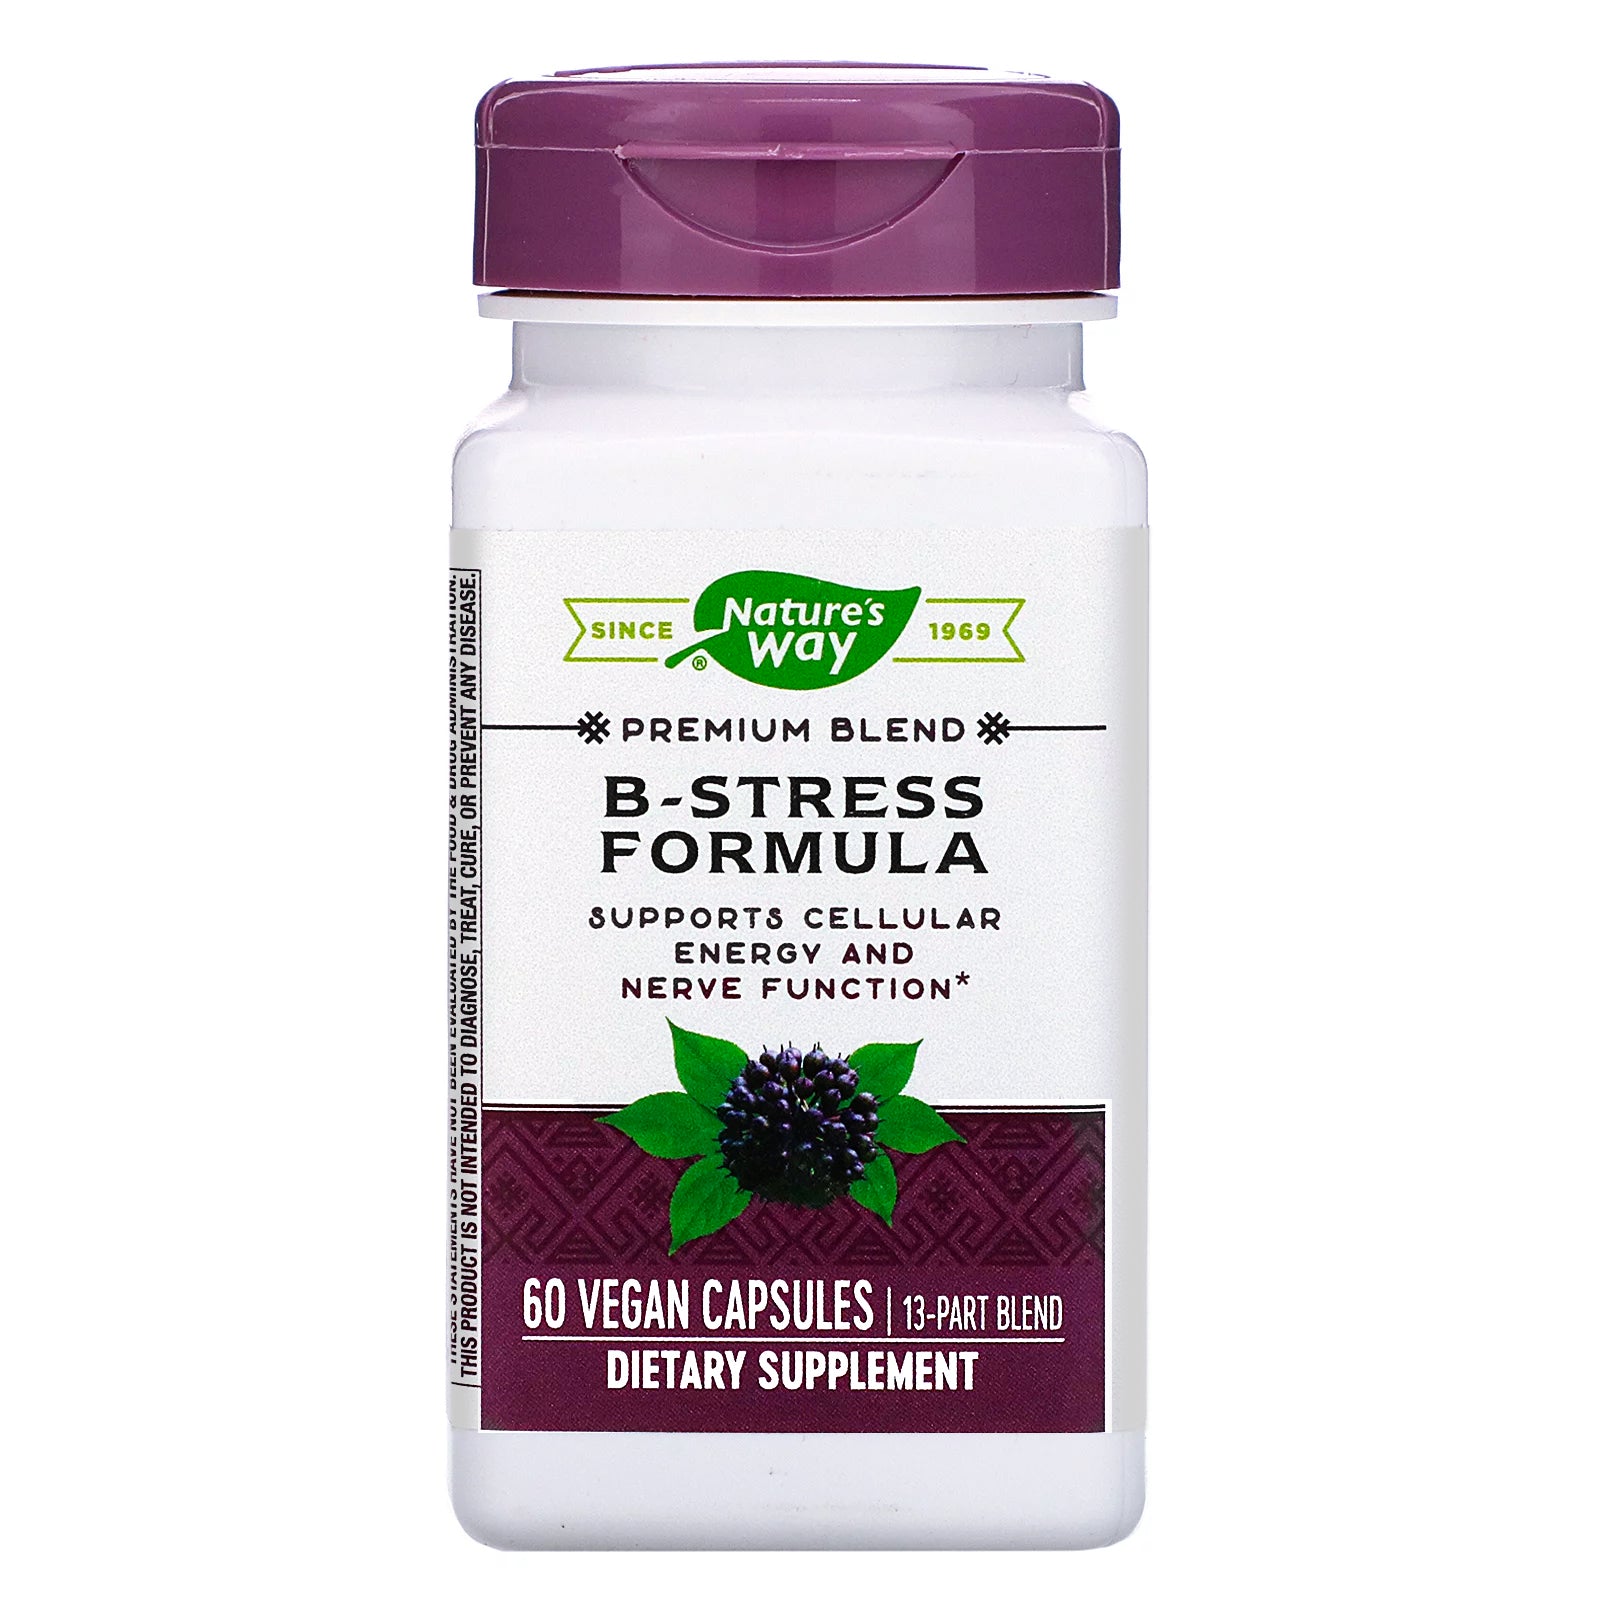 Nature's Way, B-Stress Formula, 60 Vegan Capsules